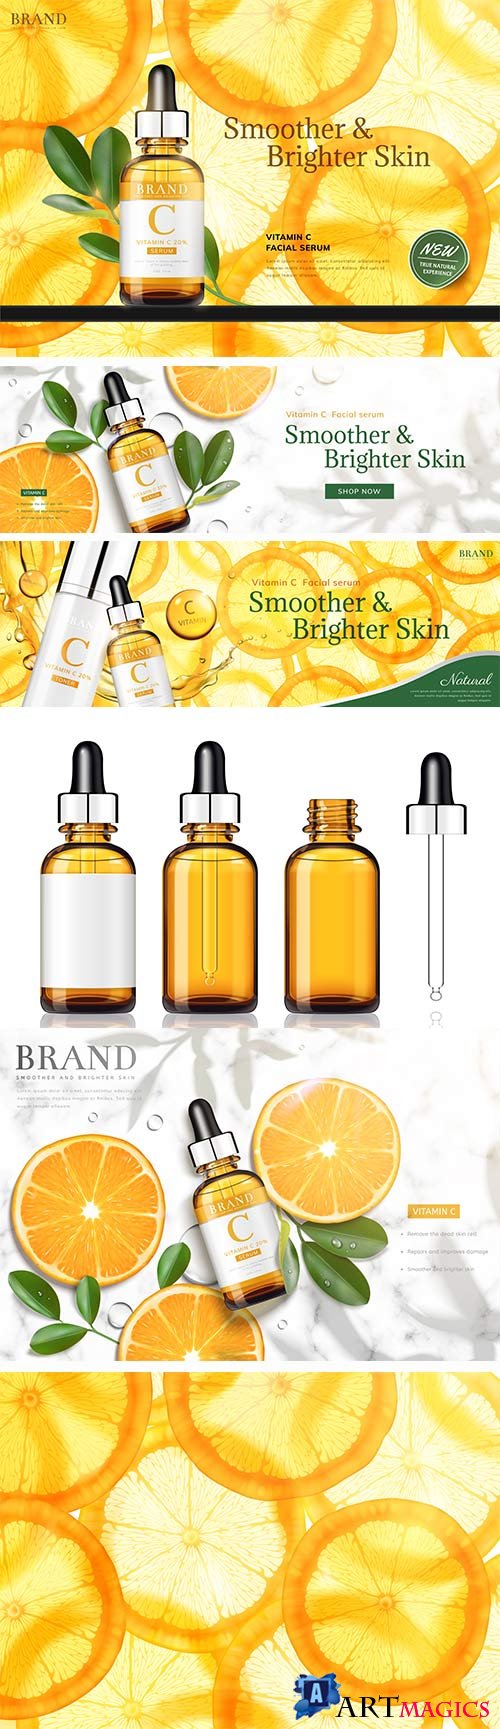 Vitamin C essence banner ads 3d vector illustration